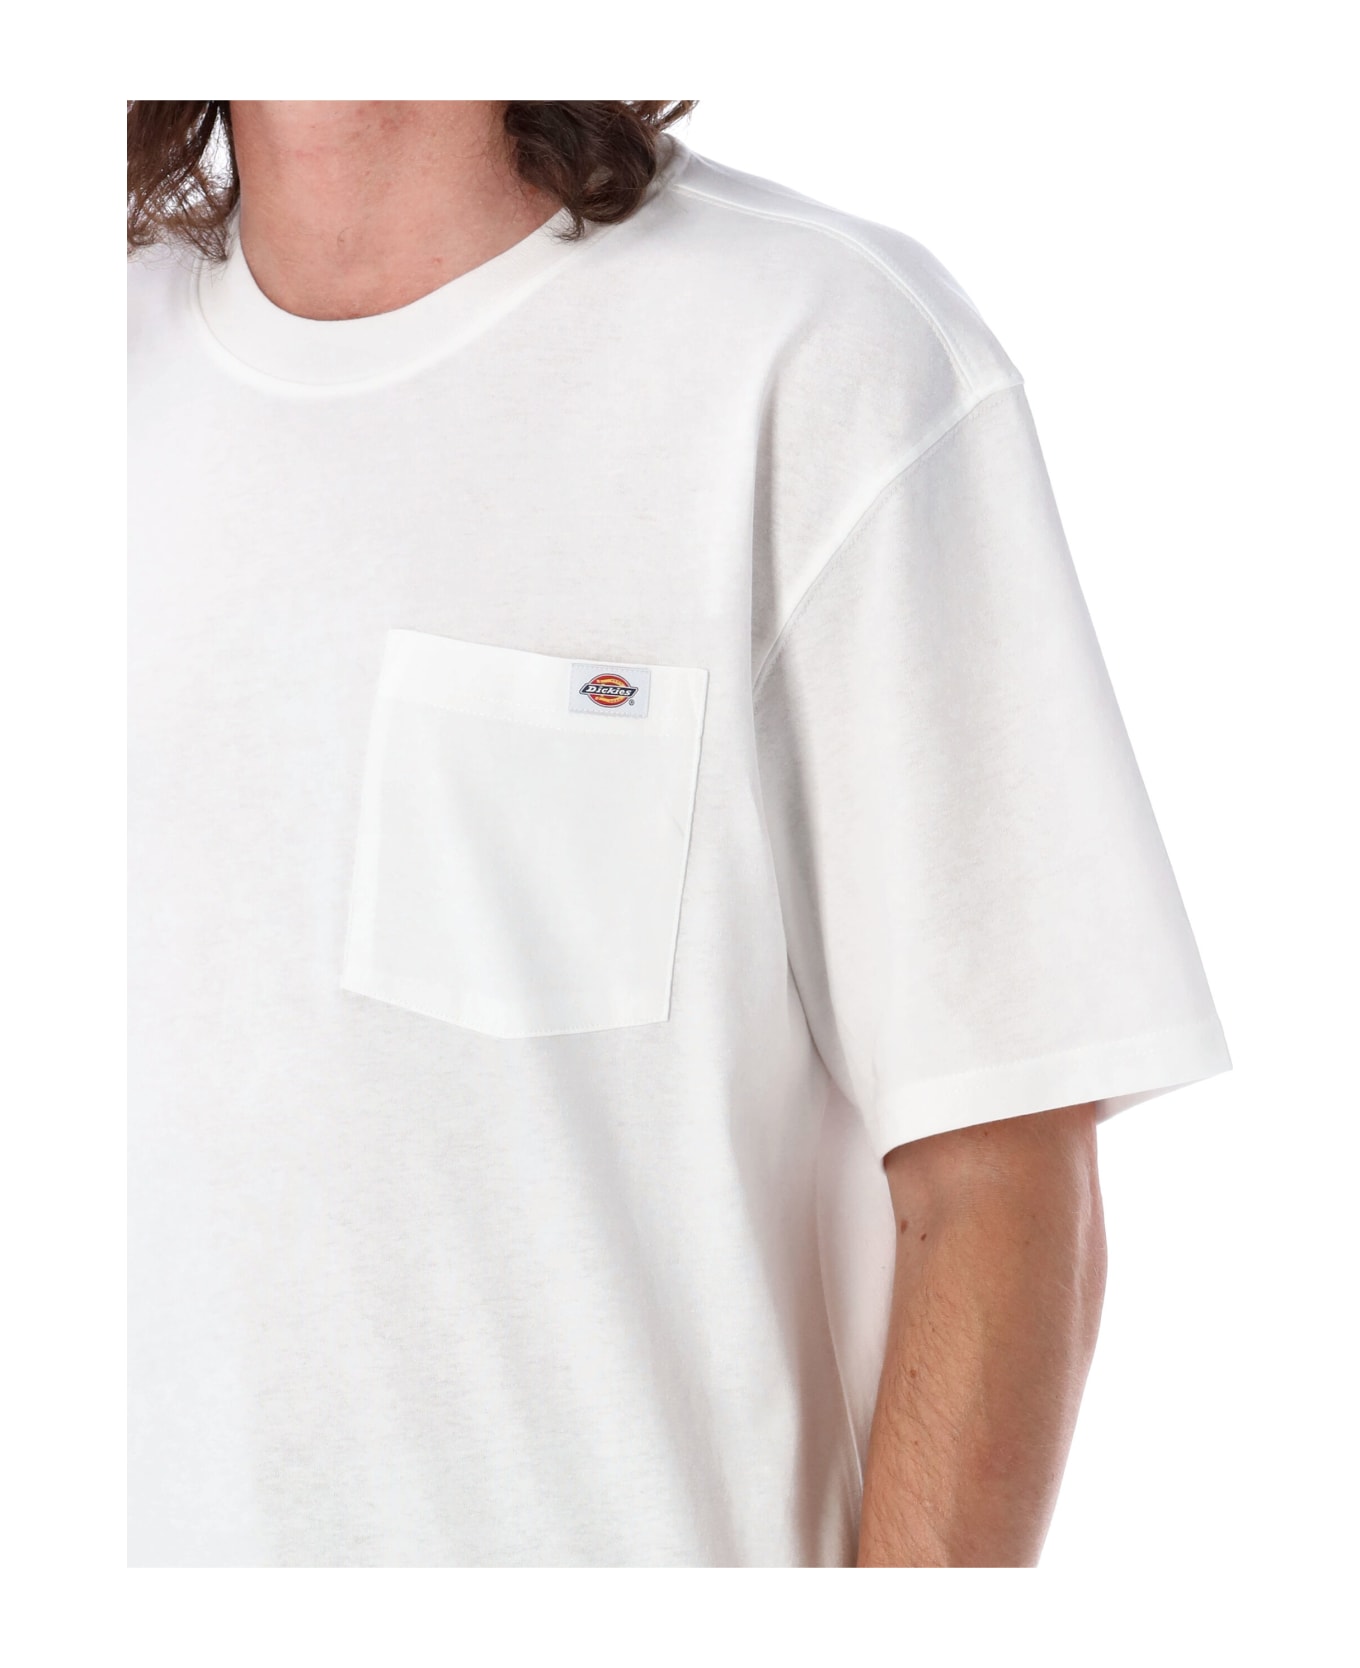 Dickies Luray Pocket T-shirt - WHITE